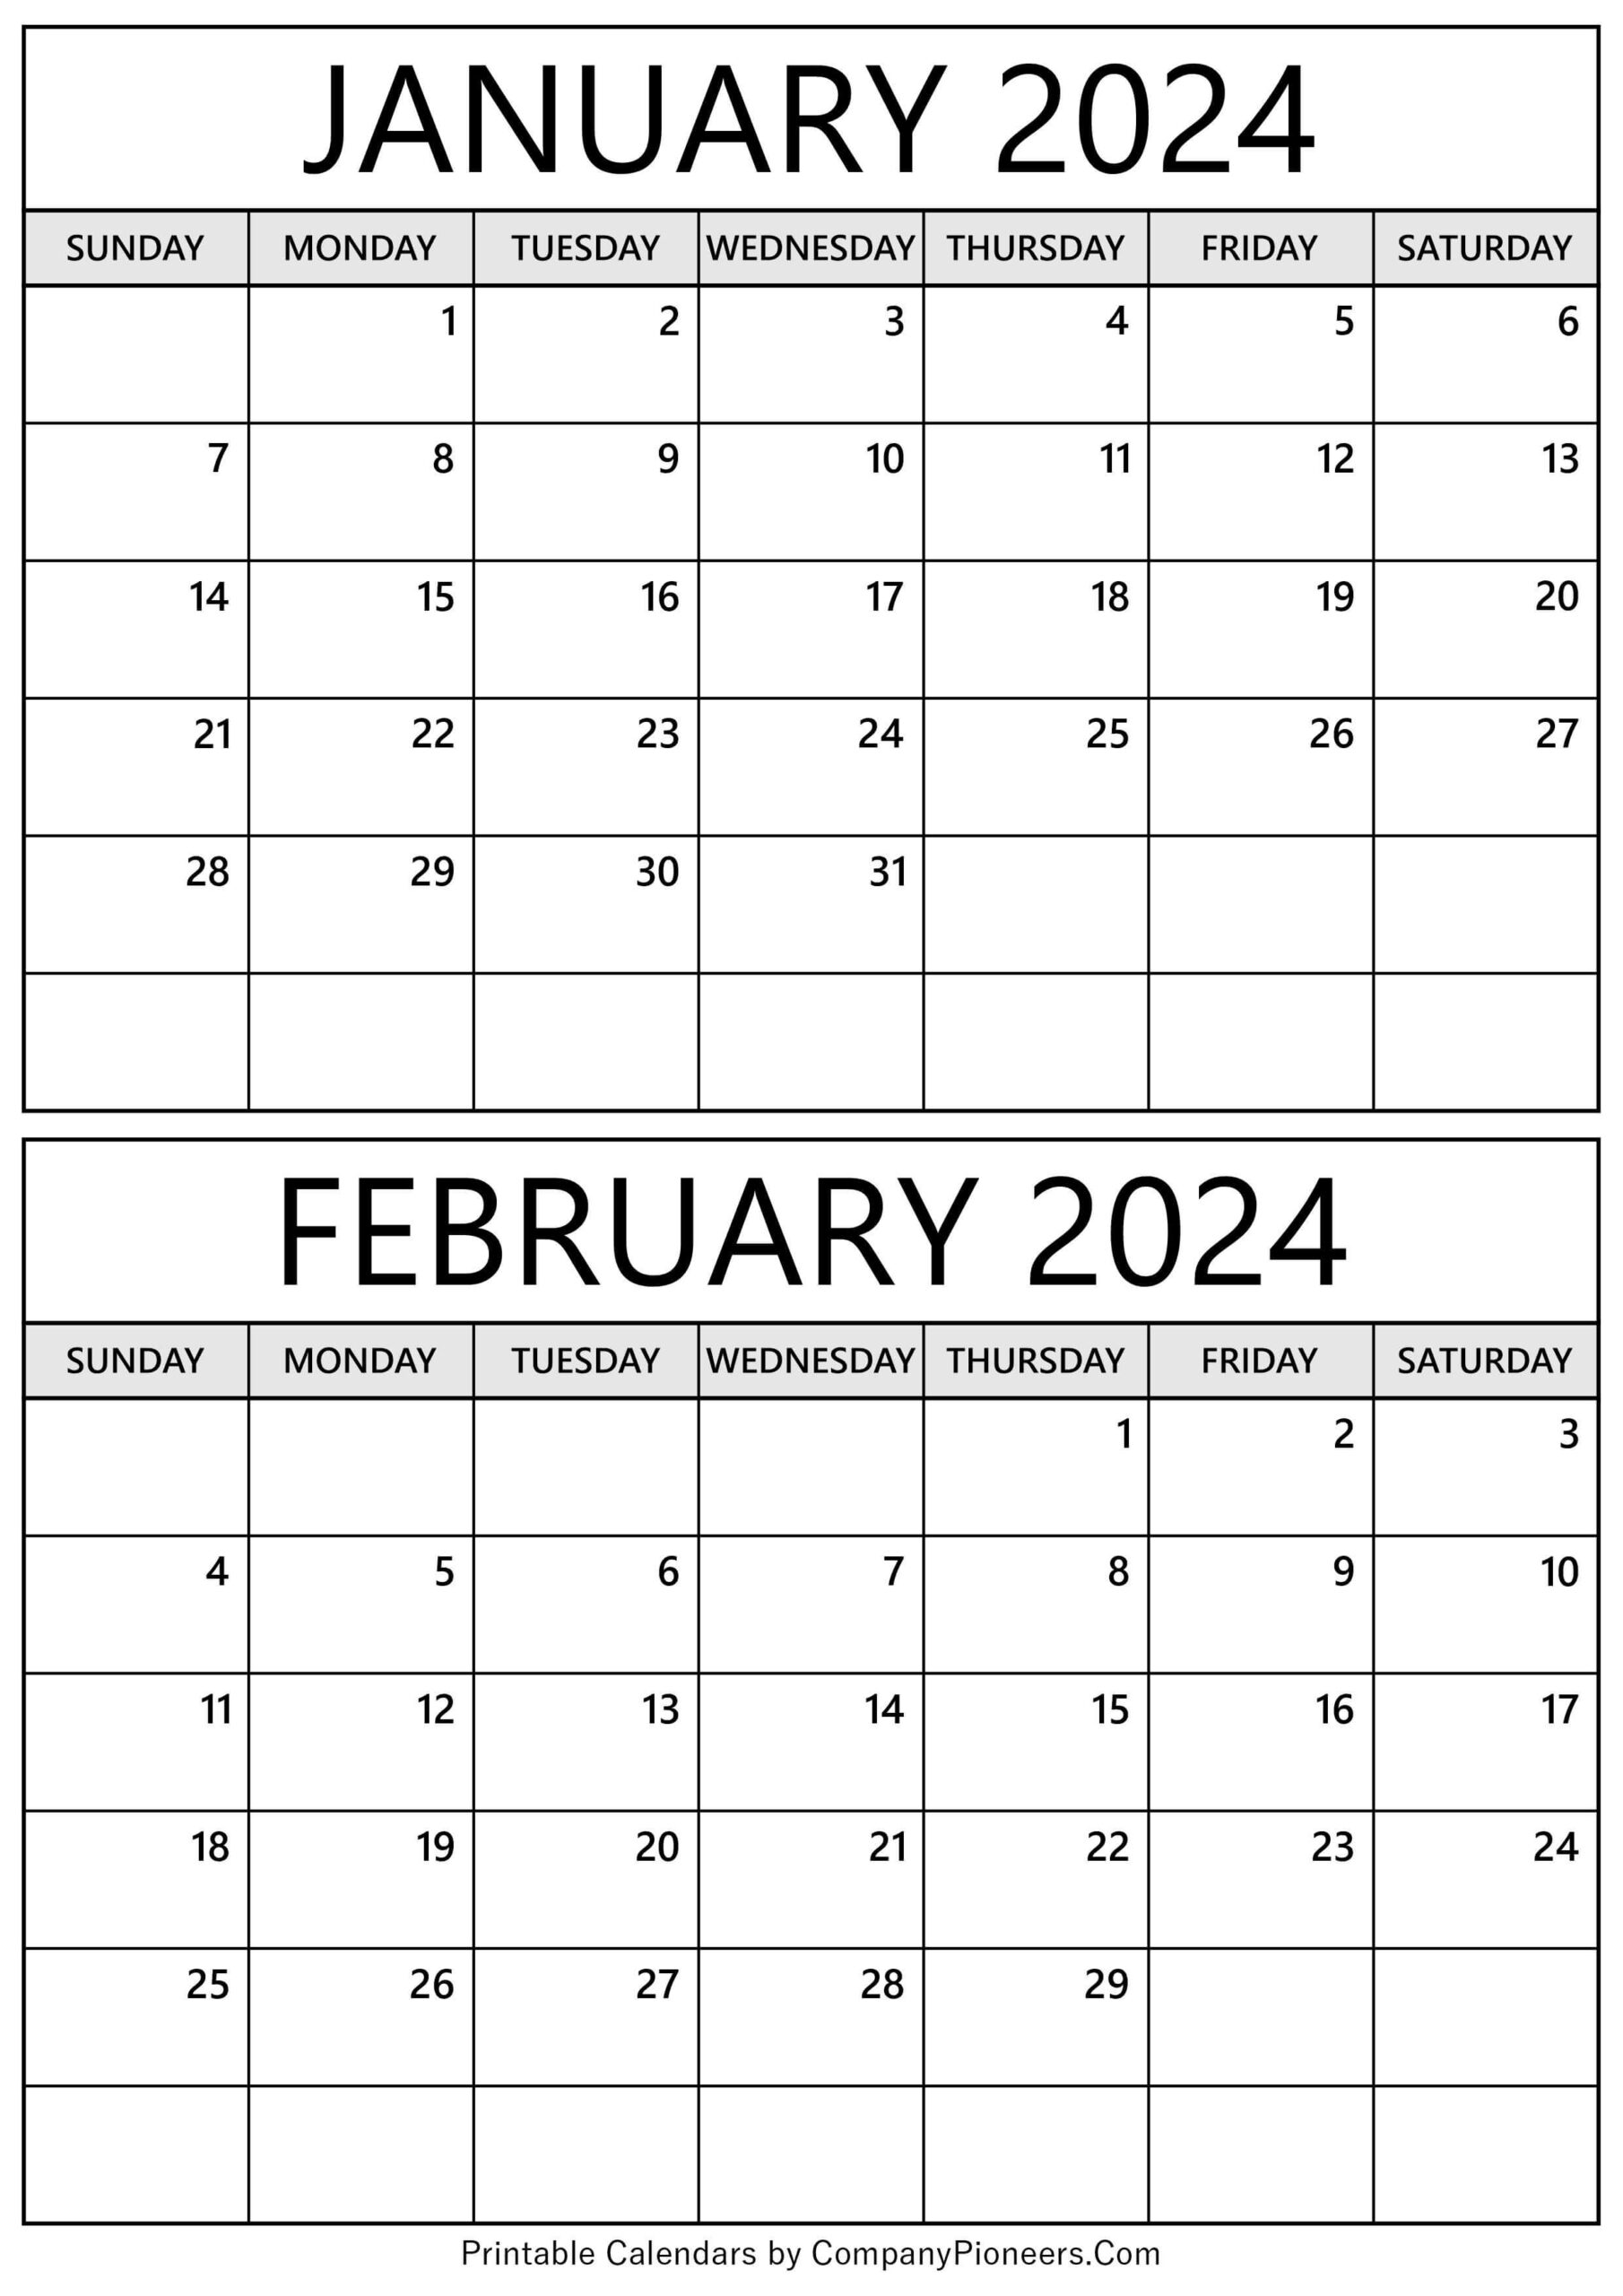 January February 2024 Calendar Printable - Template for Jan Feb 2024 Calendar Printable